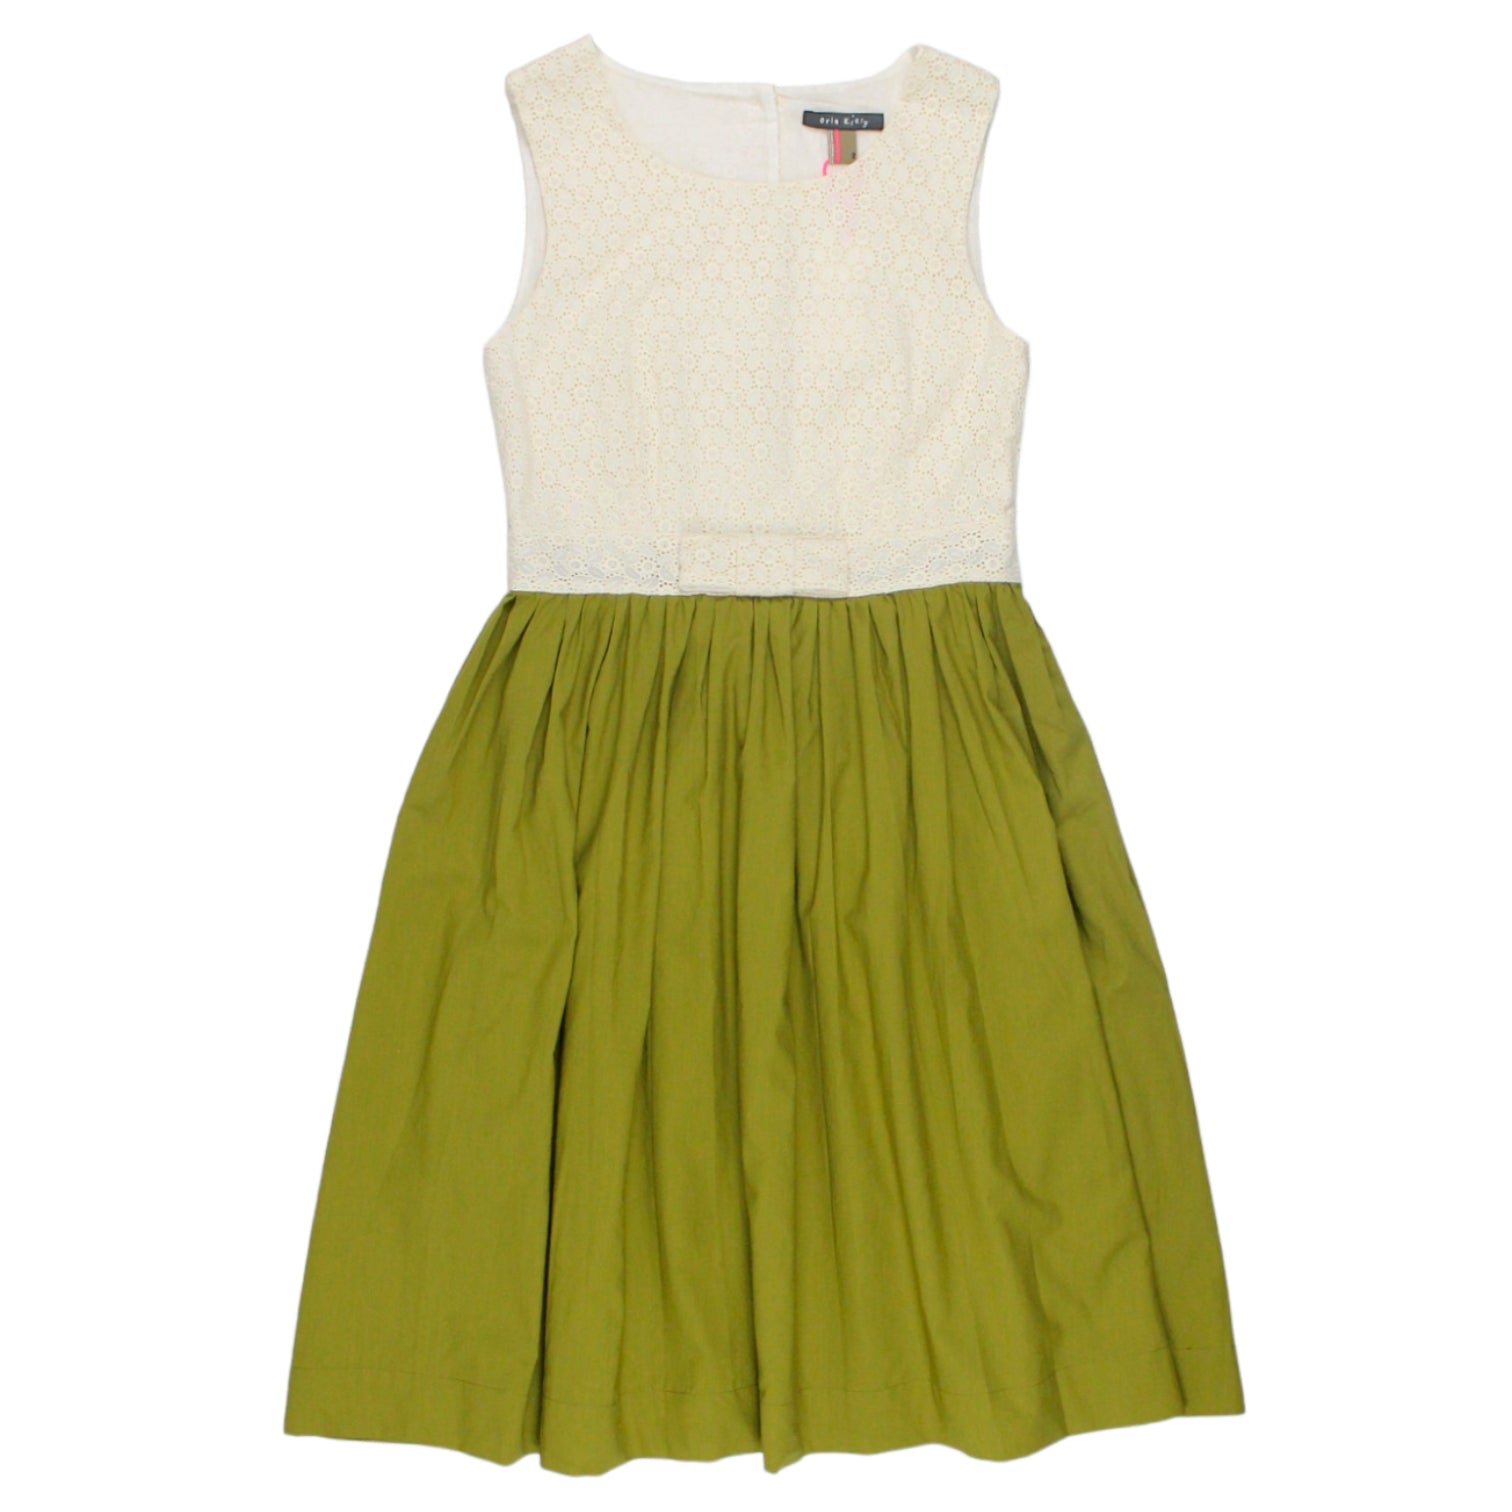 Orla Kiely Cream/Green Broderie Anglais Dress